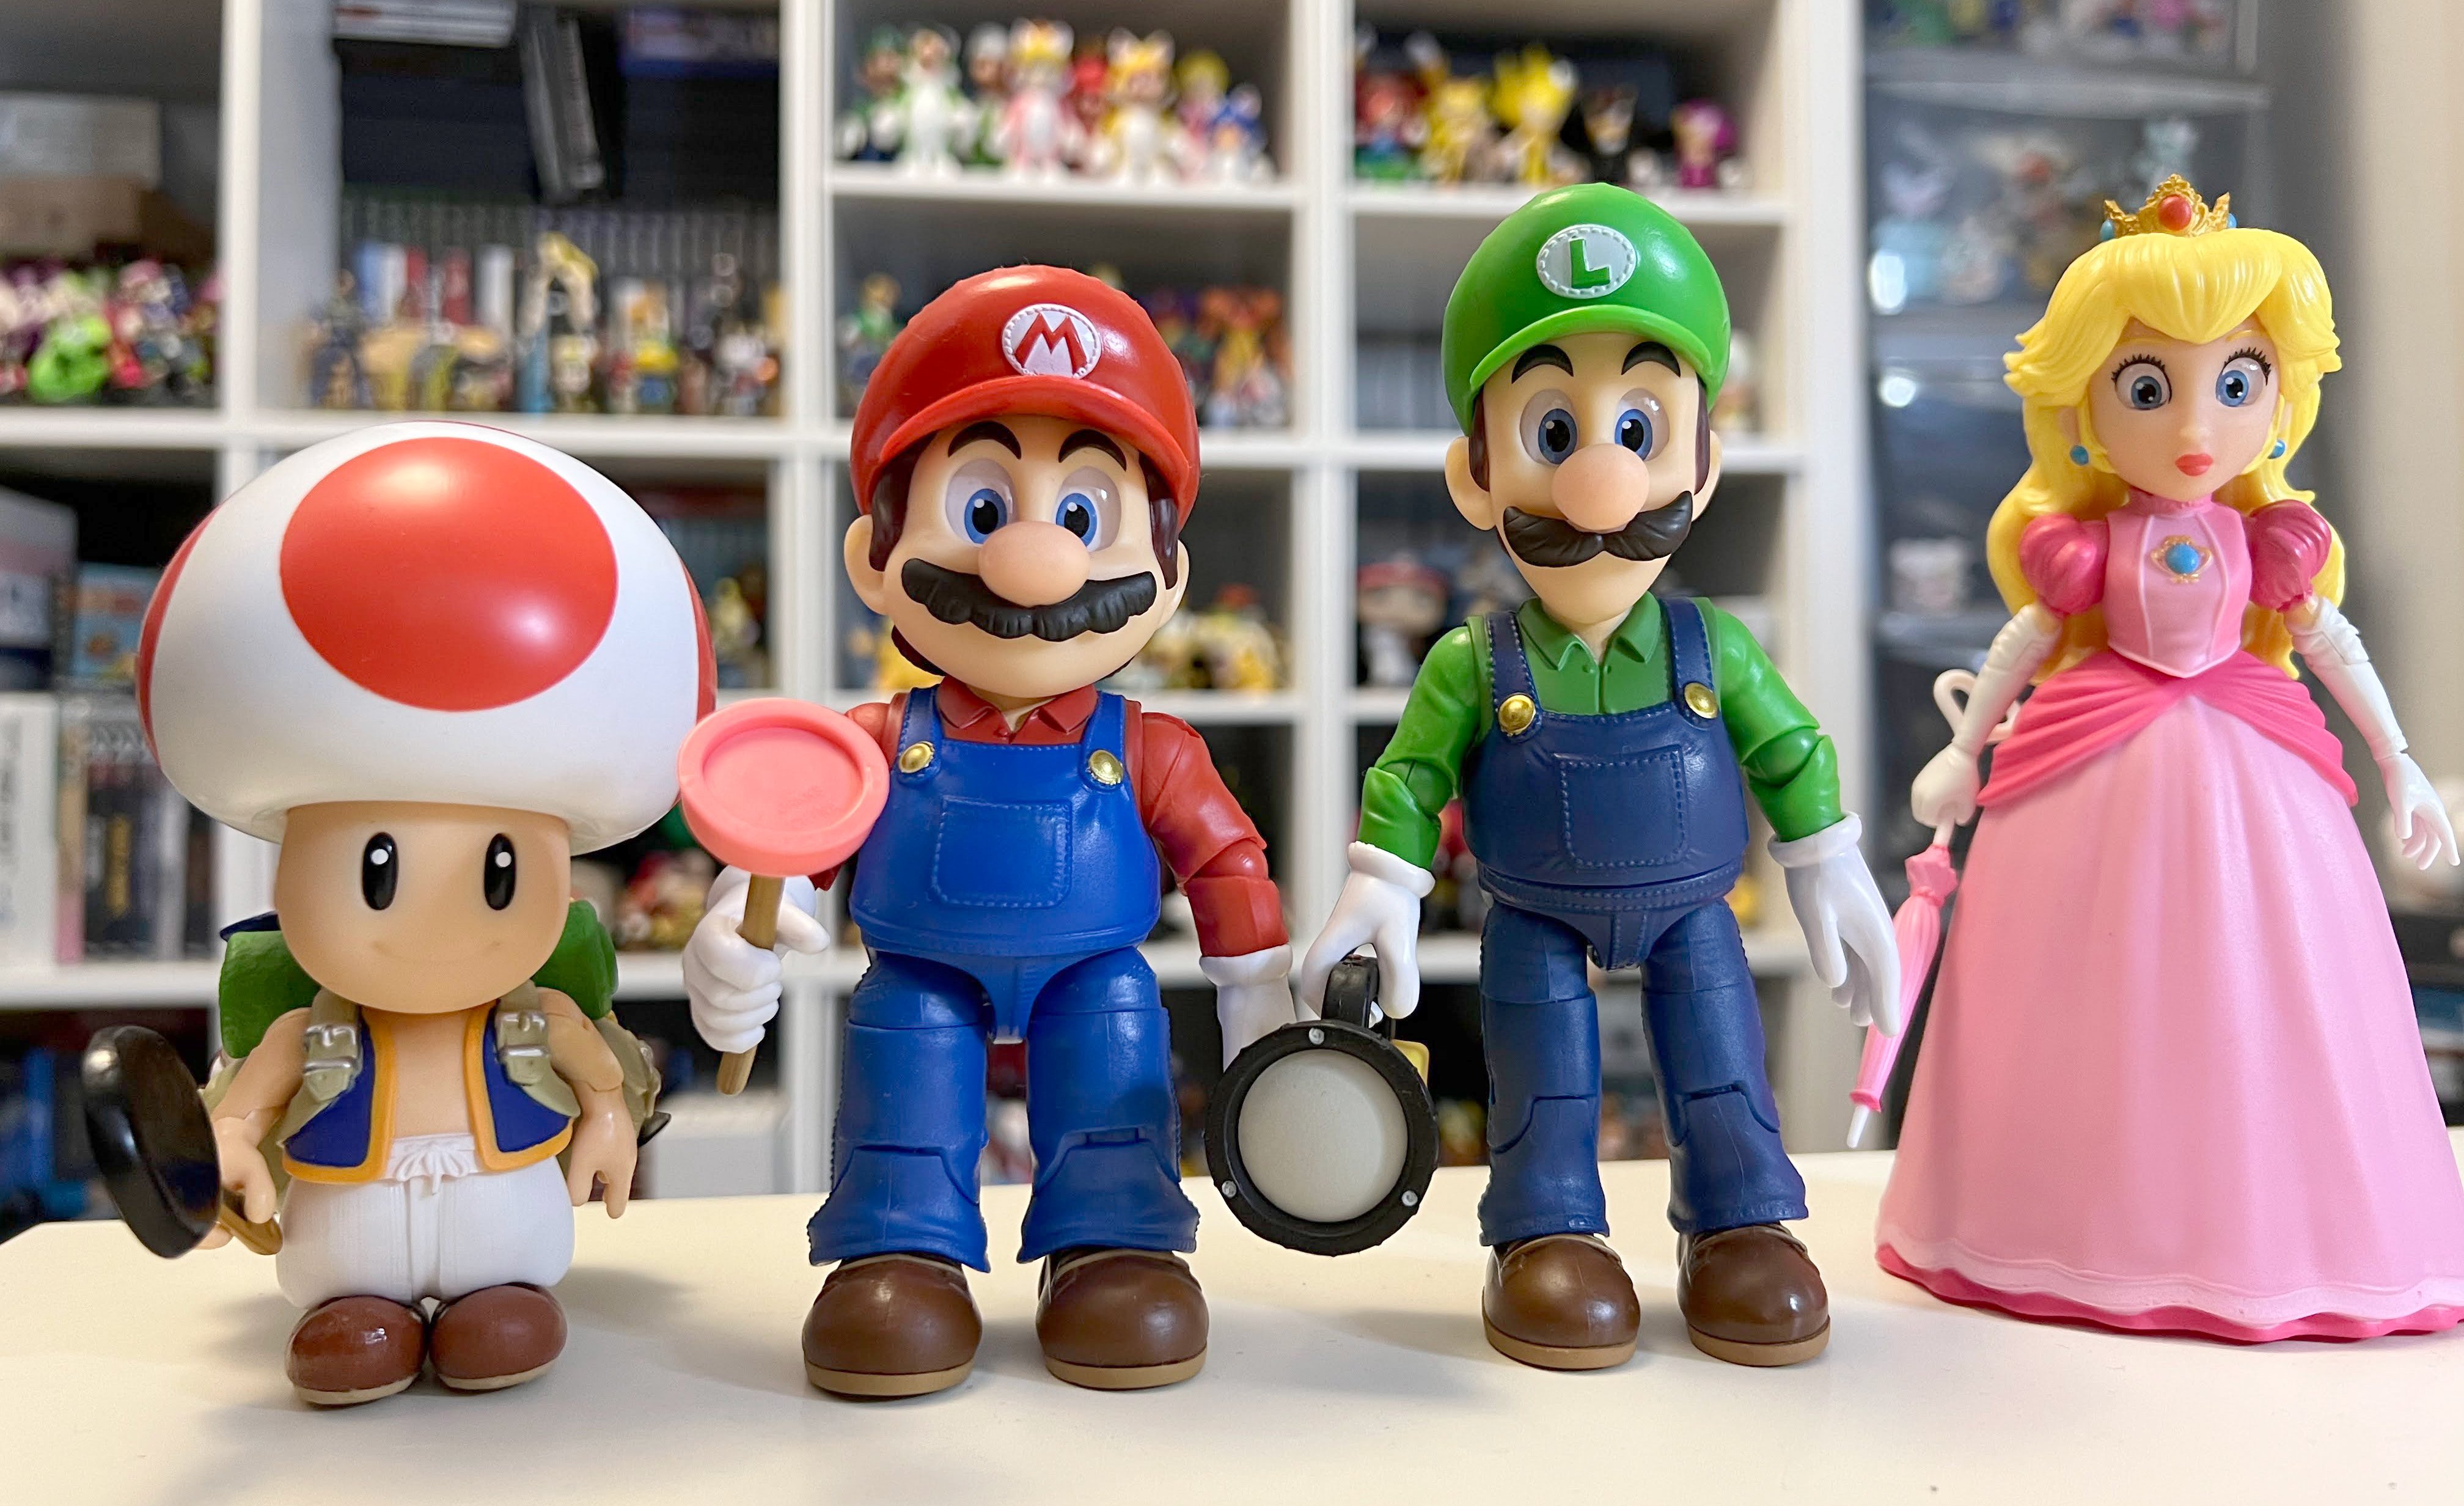 Super Mario Action Figure Dolls, Action Figures Mario Bowser